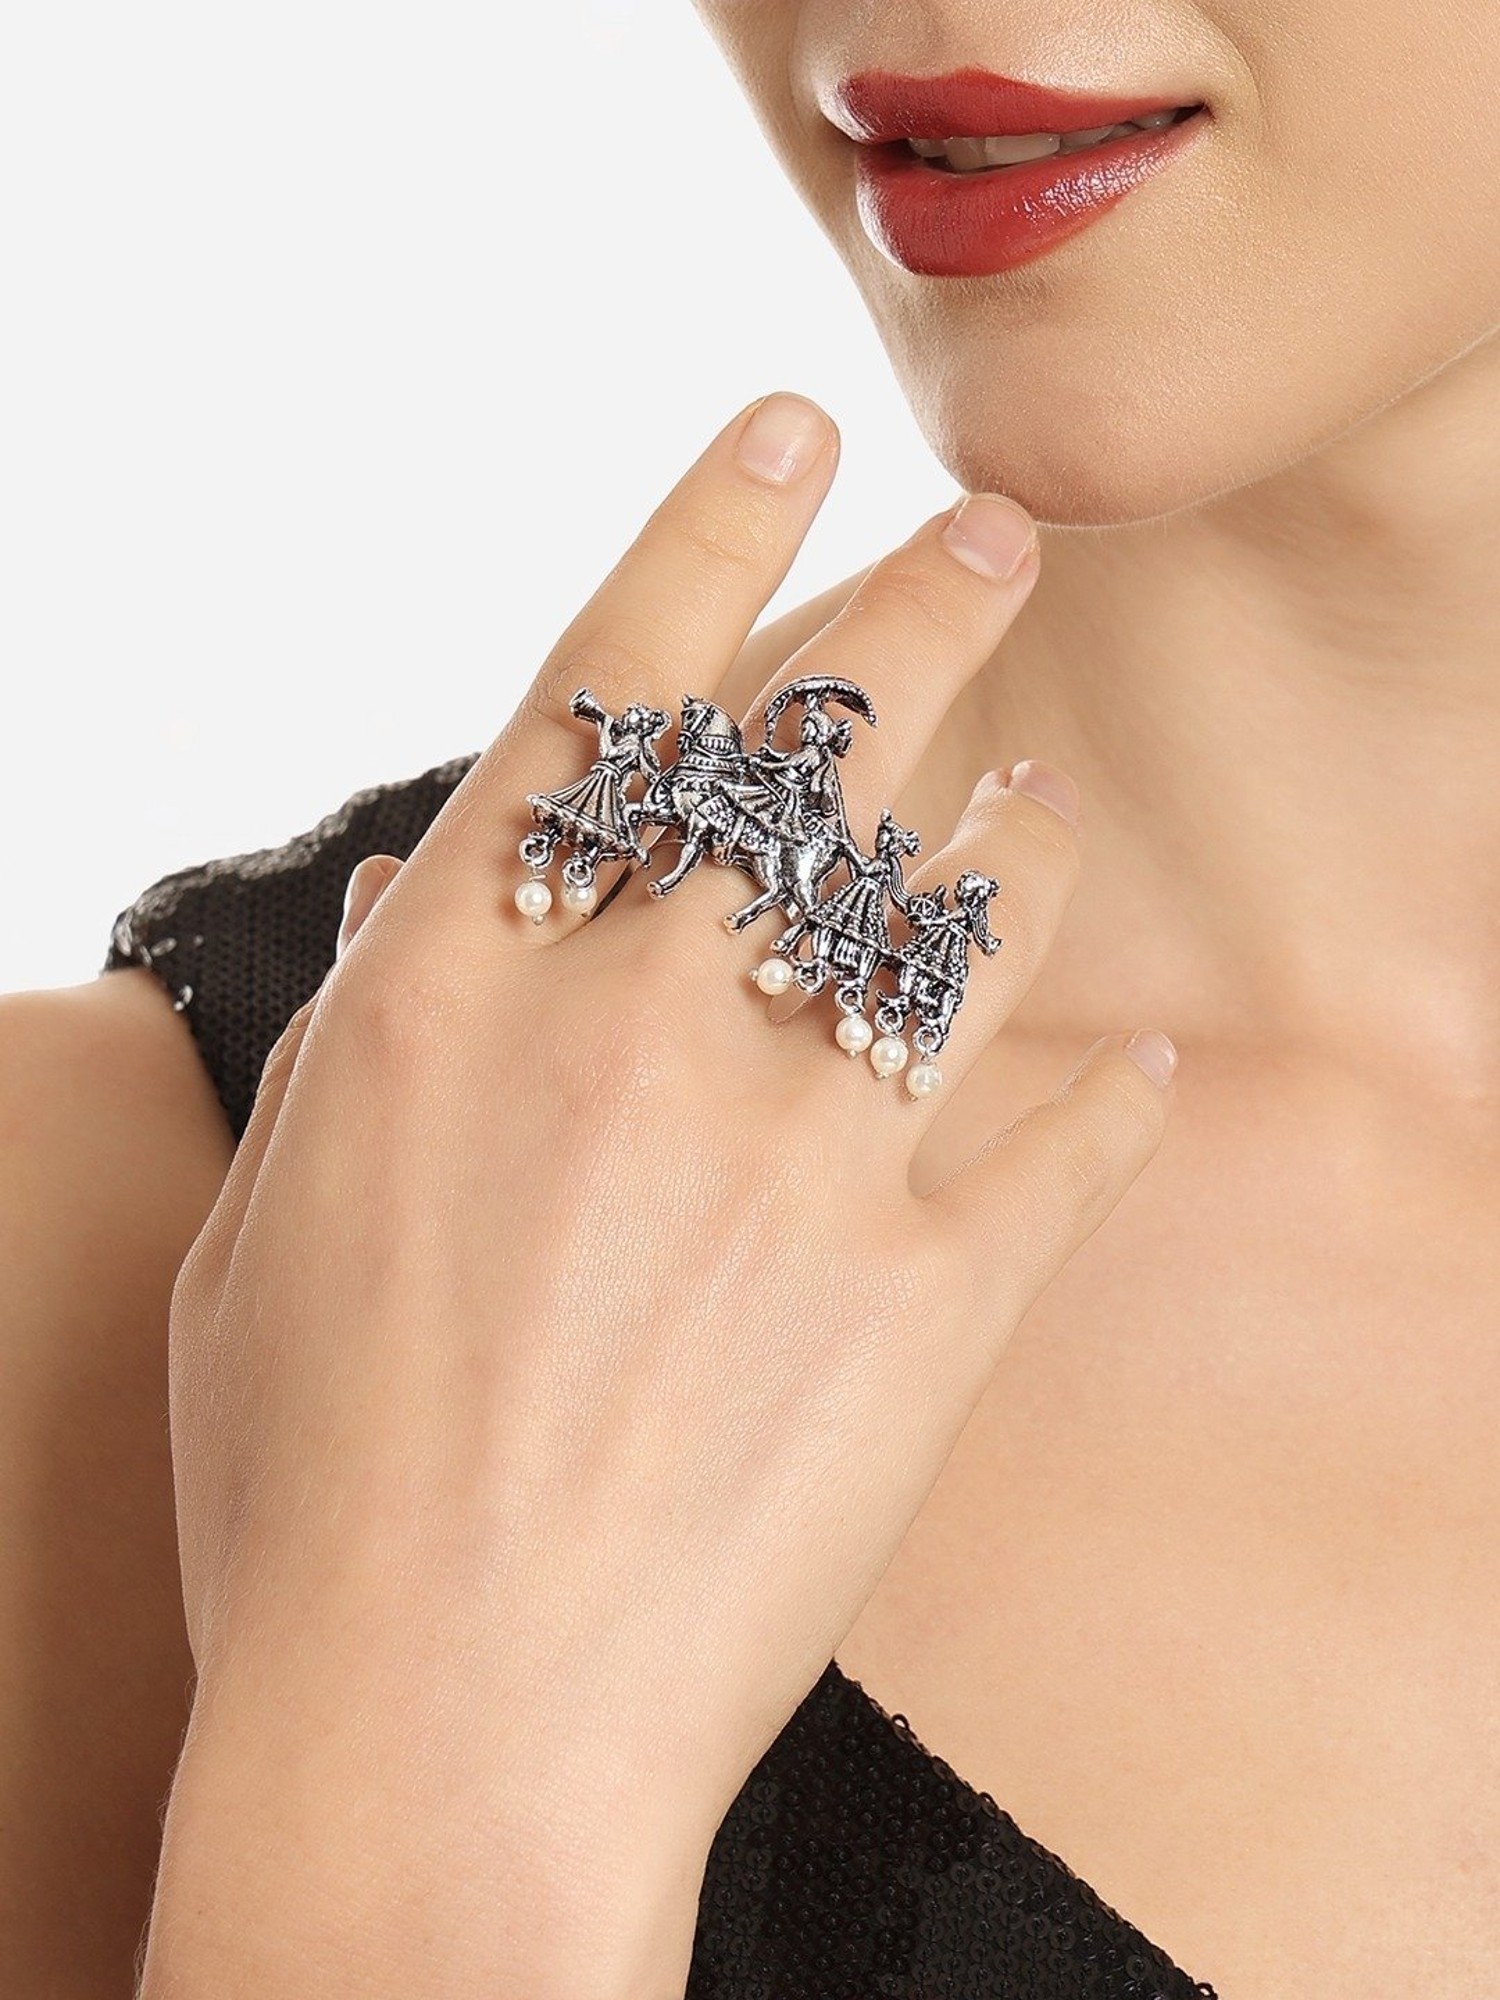 Barb Wire Ring, Barbed Wire Ring, Barb Wire Wedding Ring, Couple Rings,  Biker Rings - American Bandit Jewelry